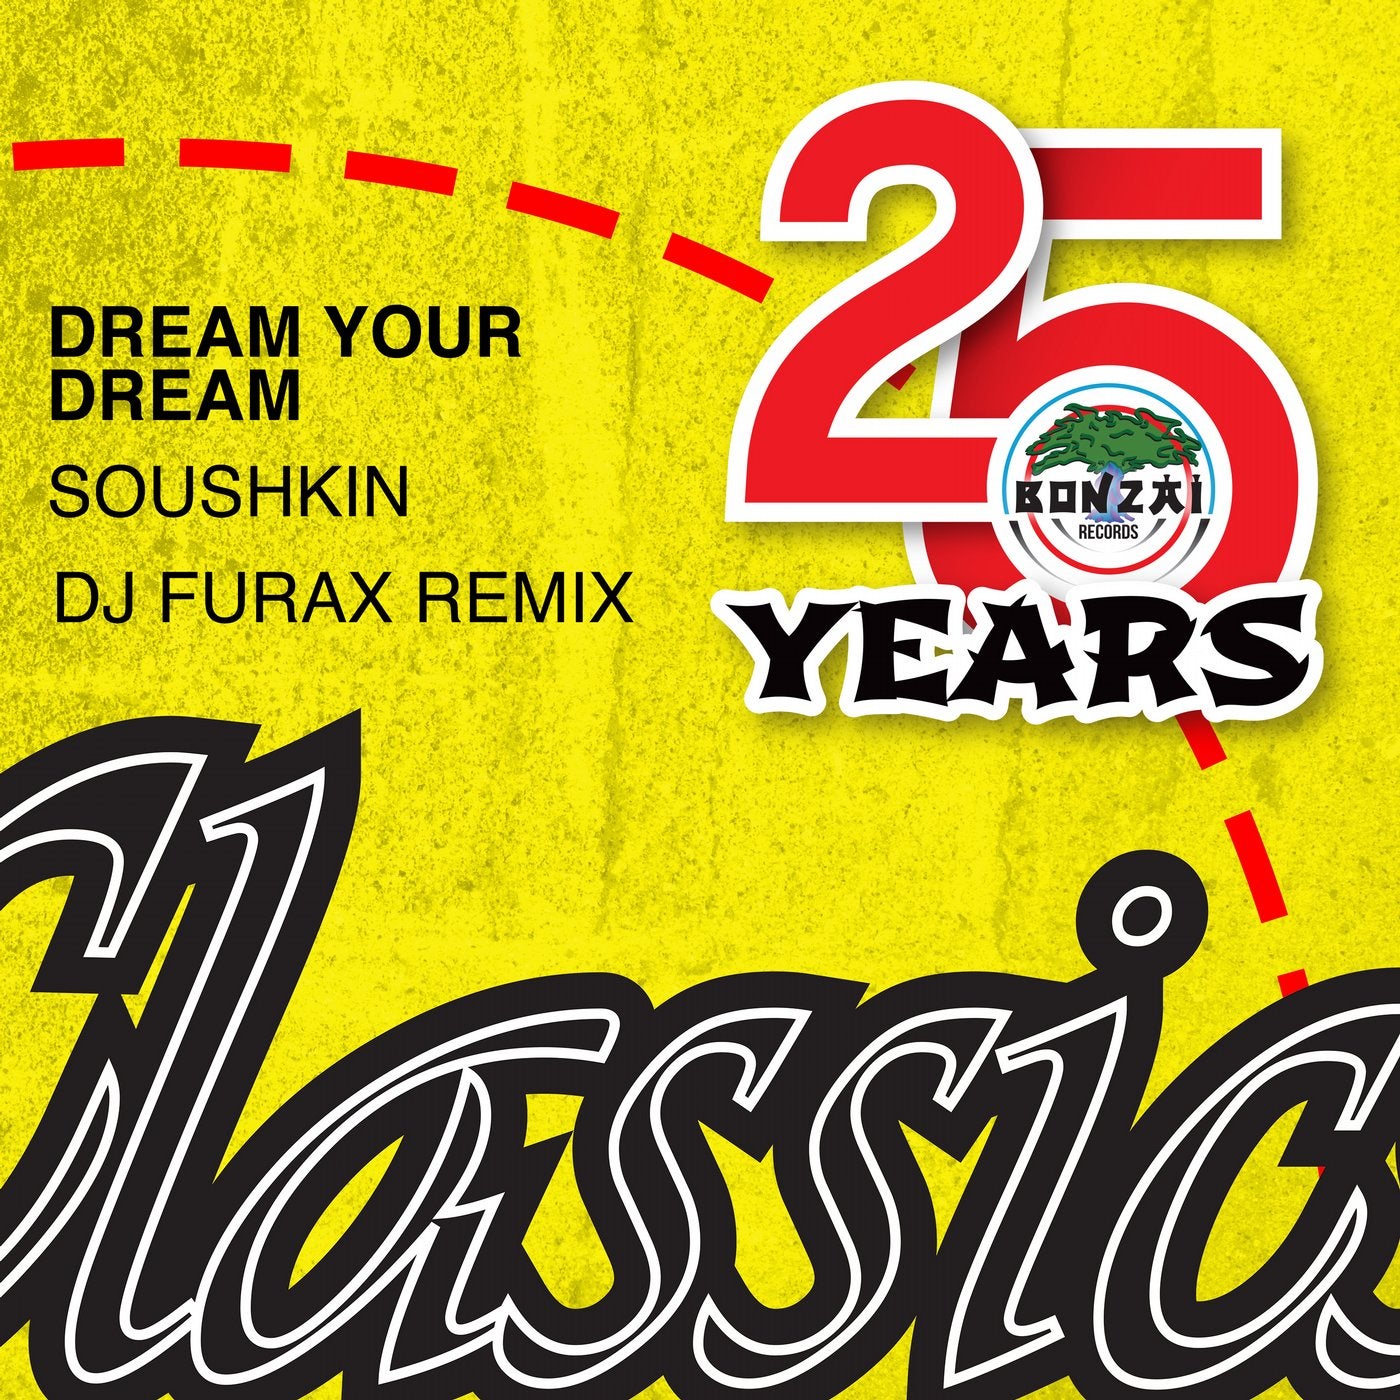 Soushkin - DJ Furax Remix